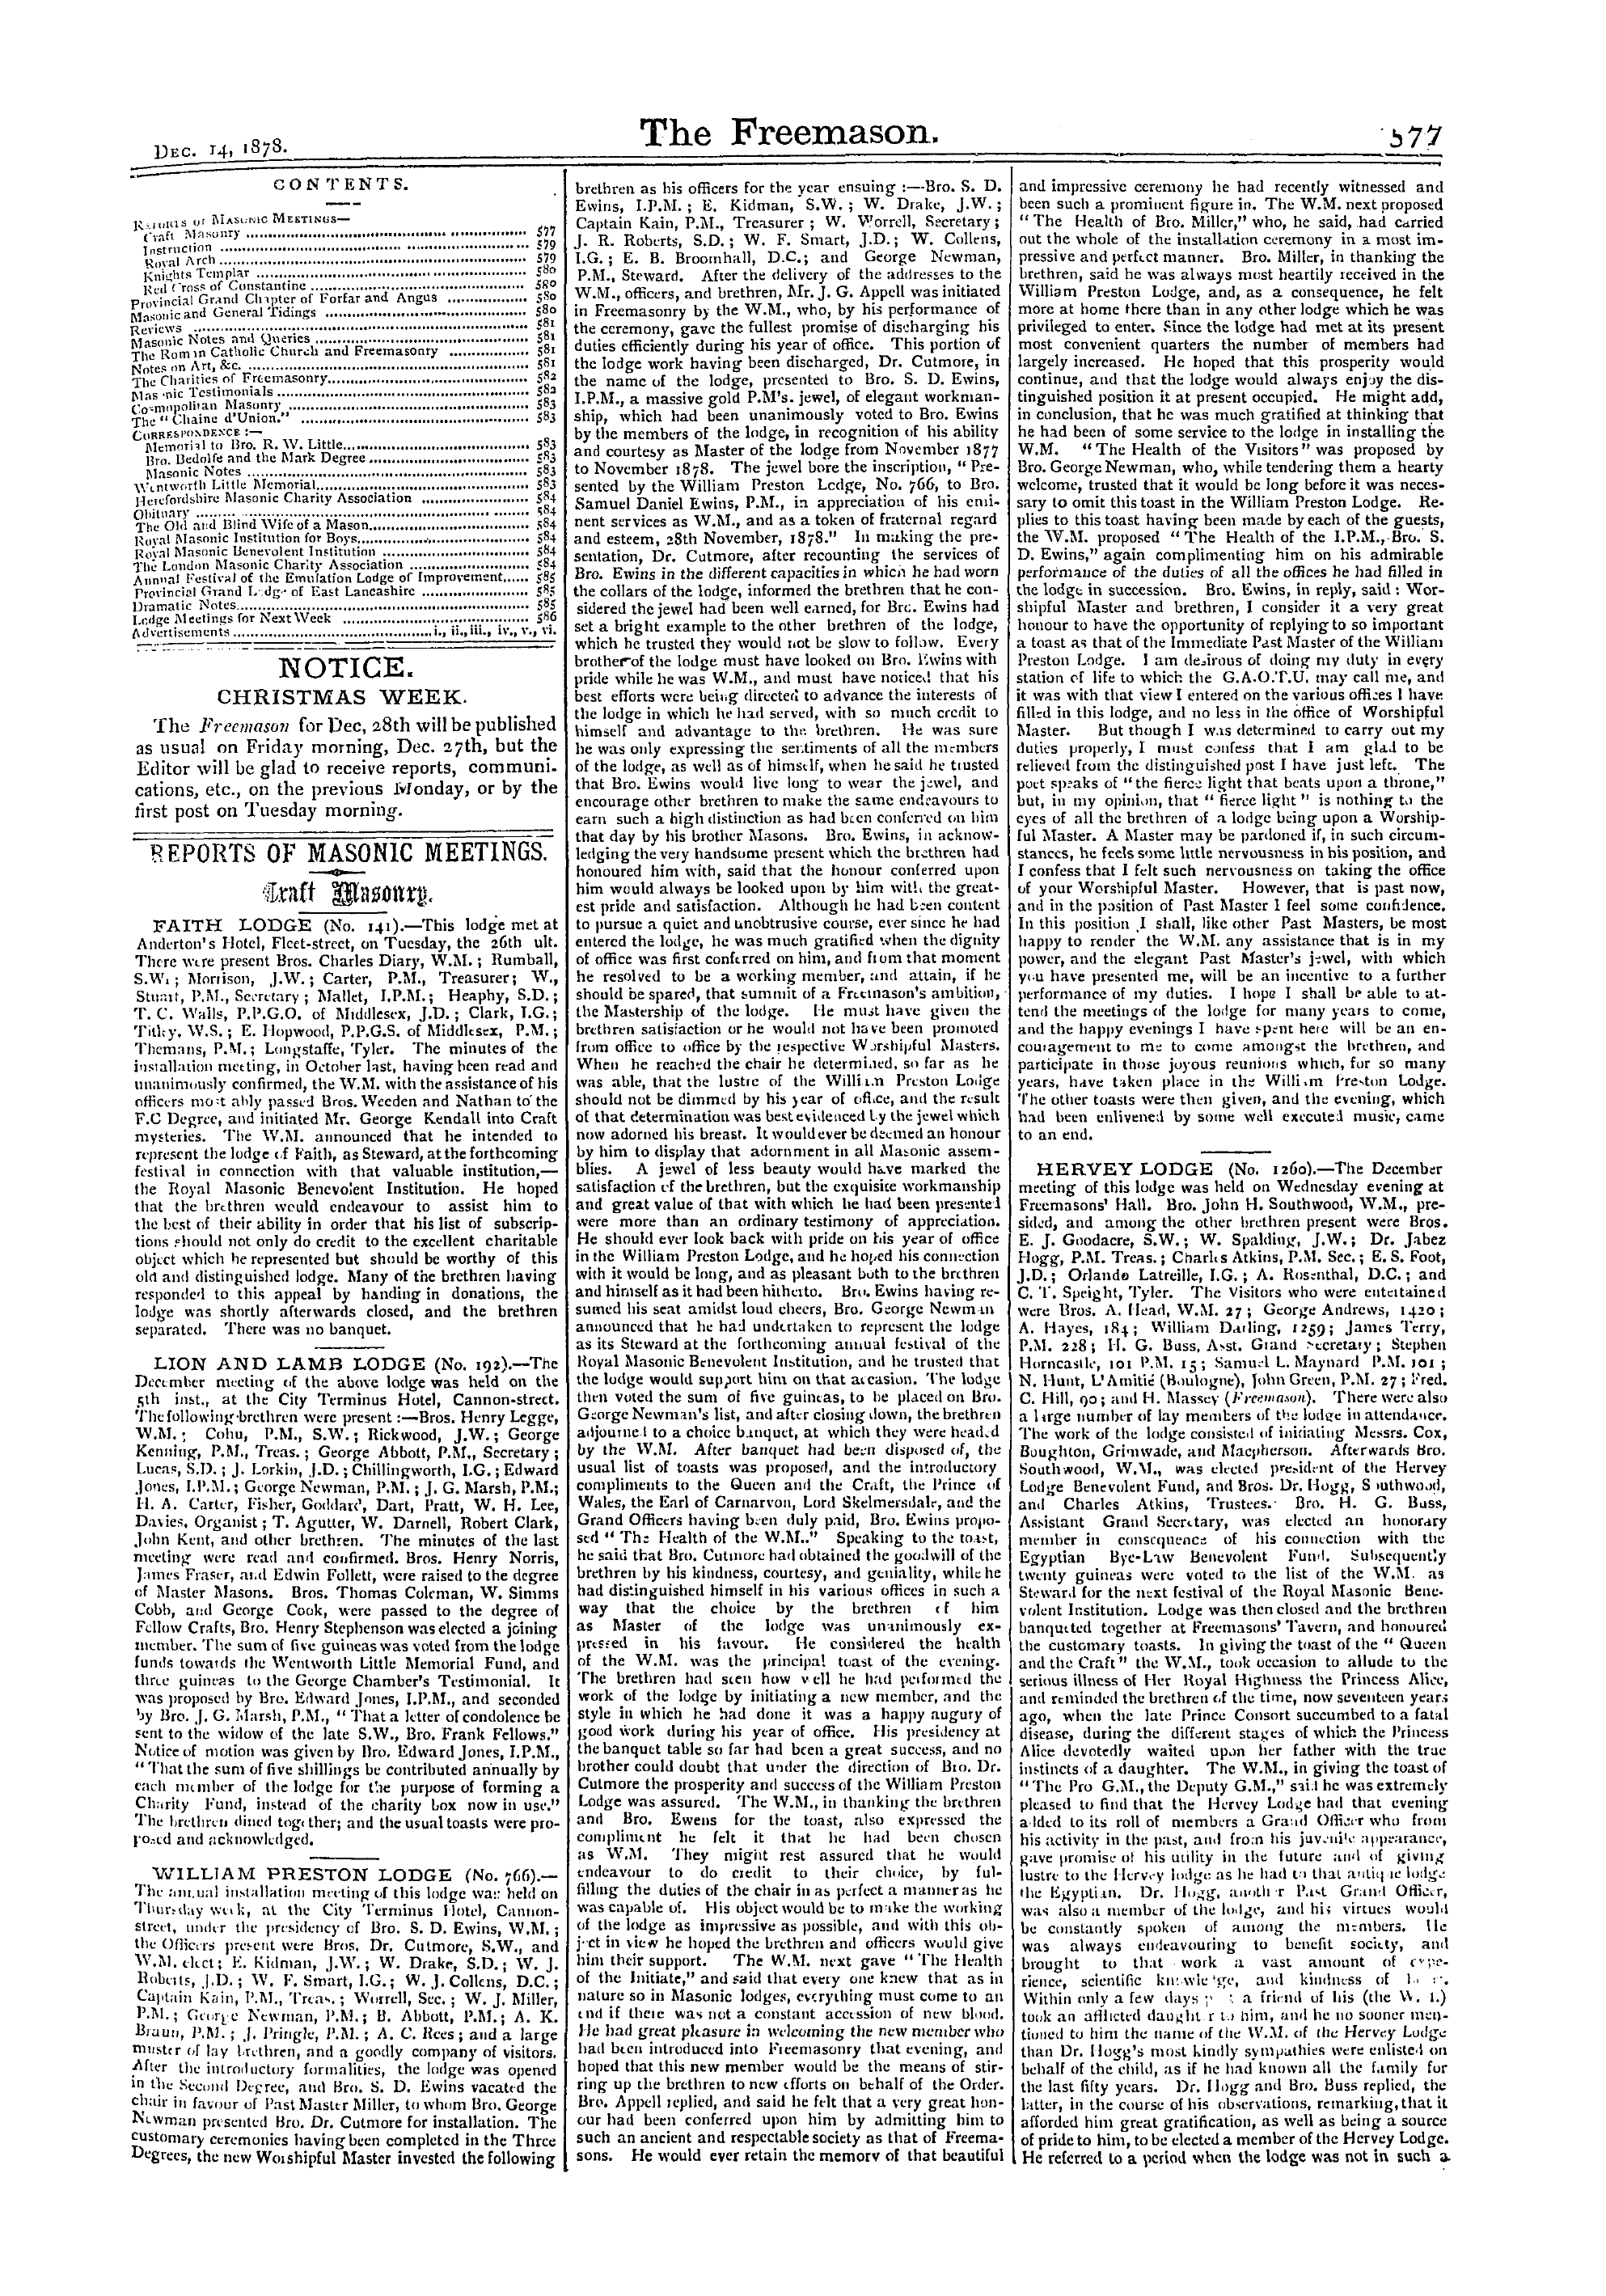 The Freemason: 1878-12-14 - Contents.